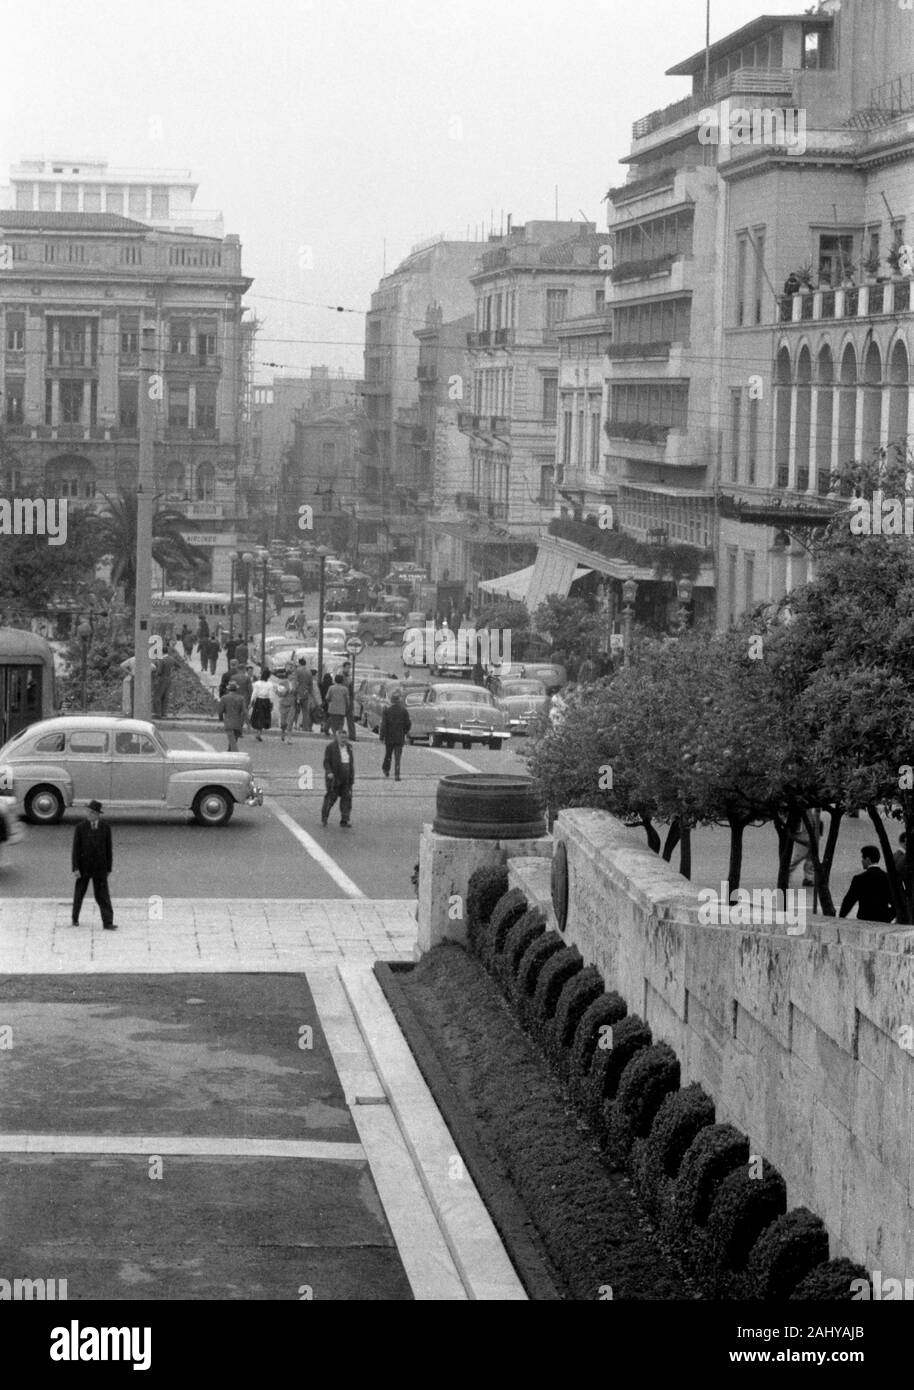 Place de la Constitution und der Königspalast in Athen, Griechenland 1950er Jahre. Place de la Constitution and the Royal Palace in Athens, Greece 1950s. Stock Photo